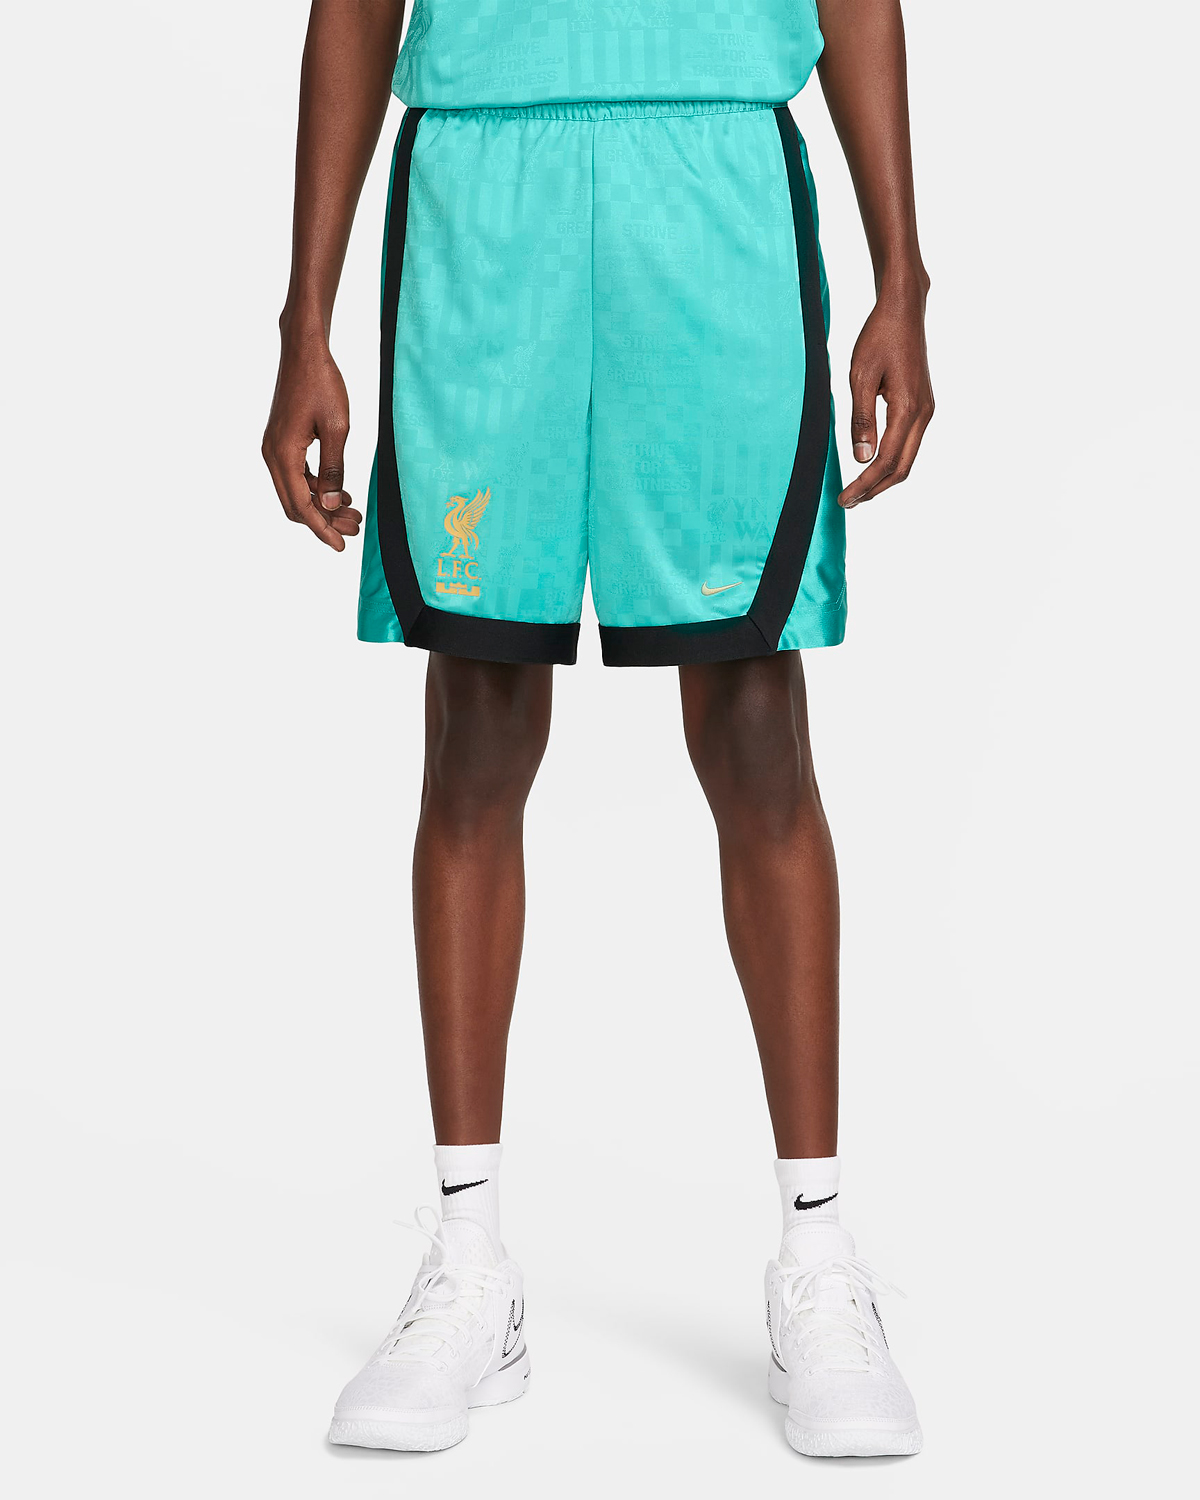 Nike-LeBron-James-Liverpool-FC-Basketball-Shorts